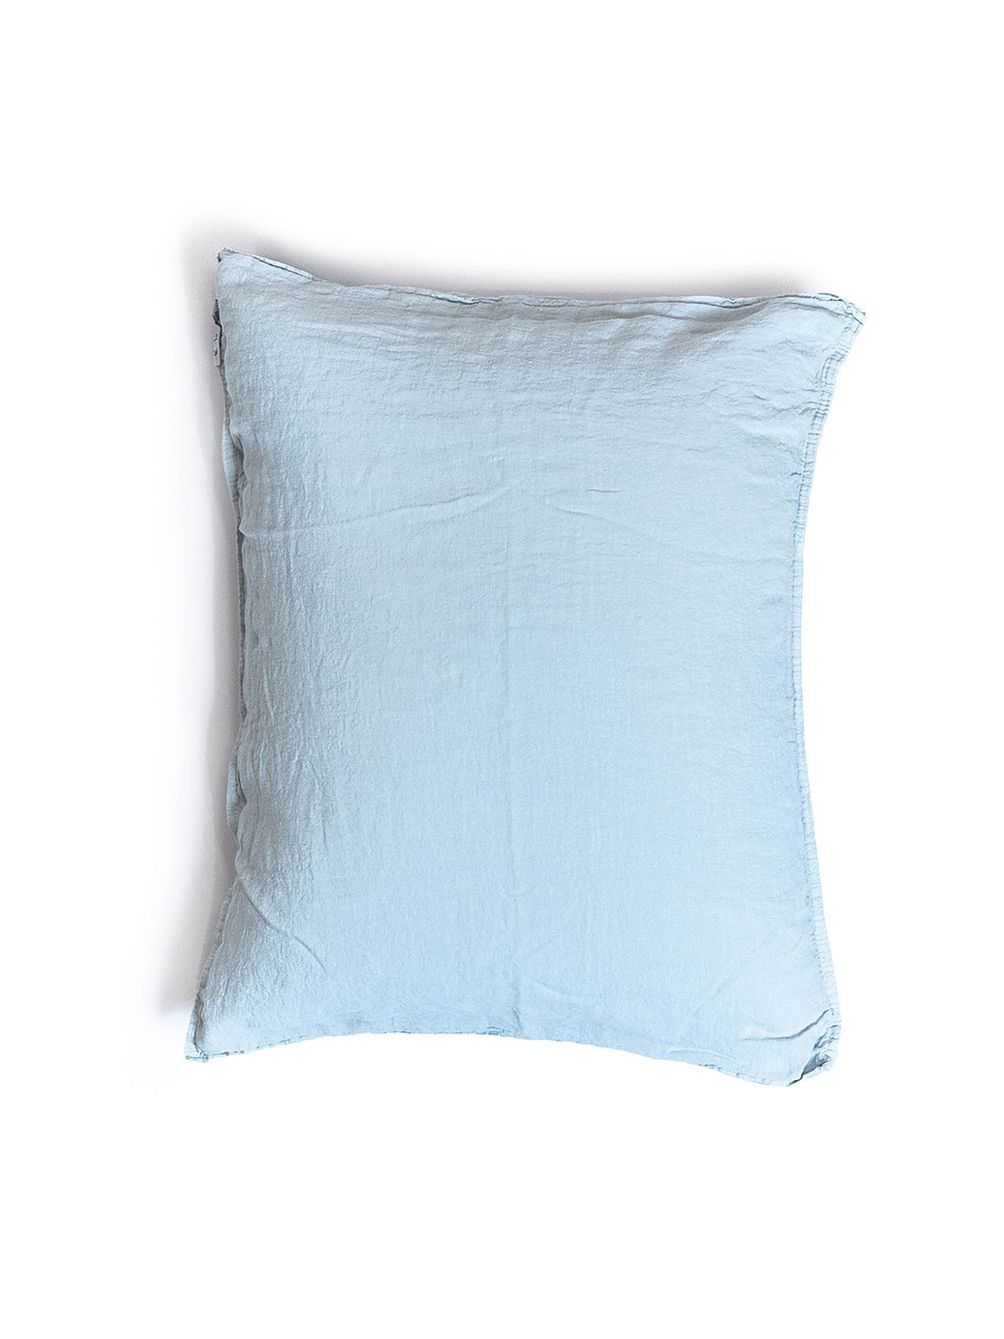 50x60cm Pillowcase Linen Heavenly